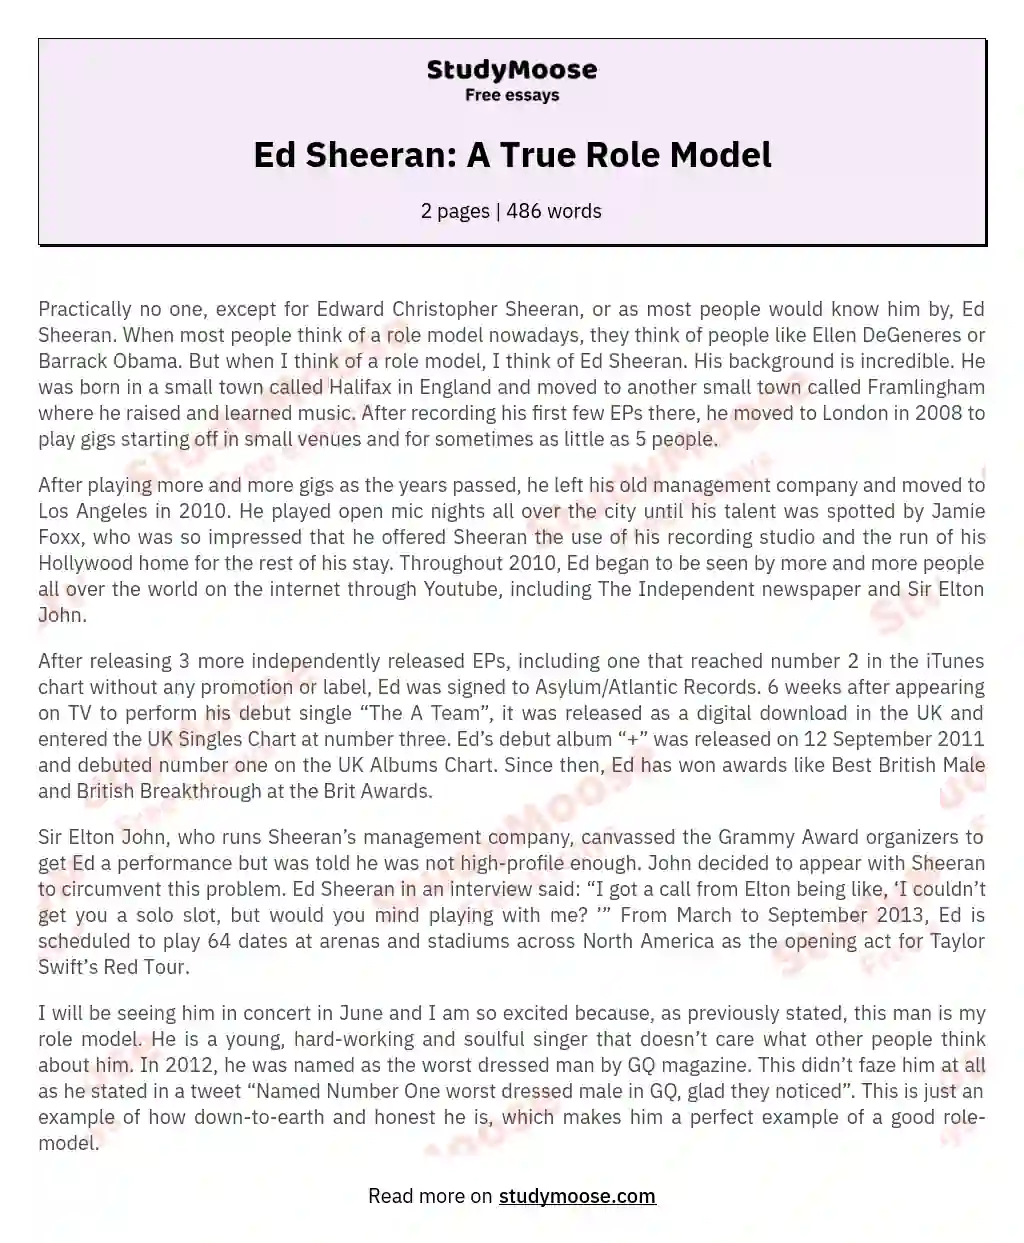 Ed Sheeran: A True Role Model essay